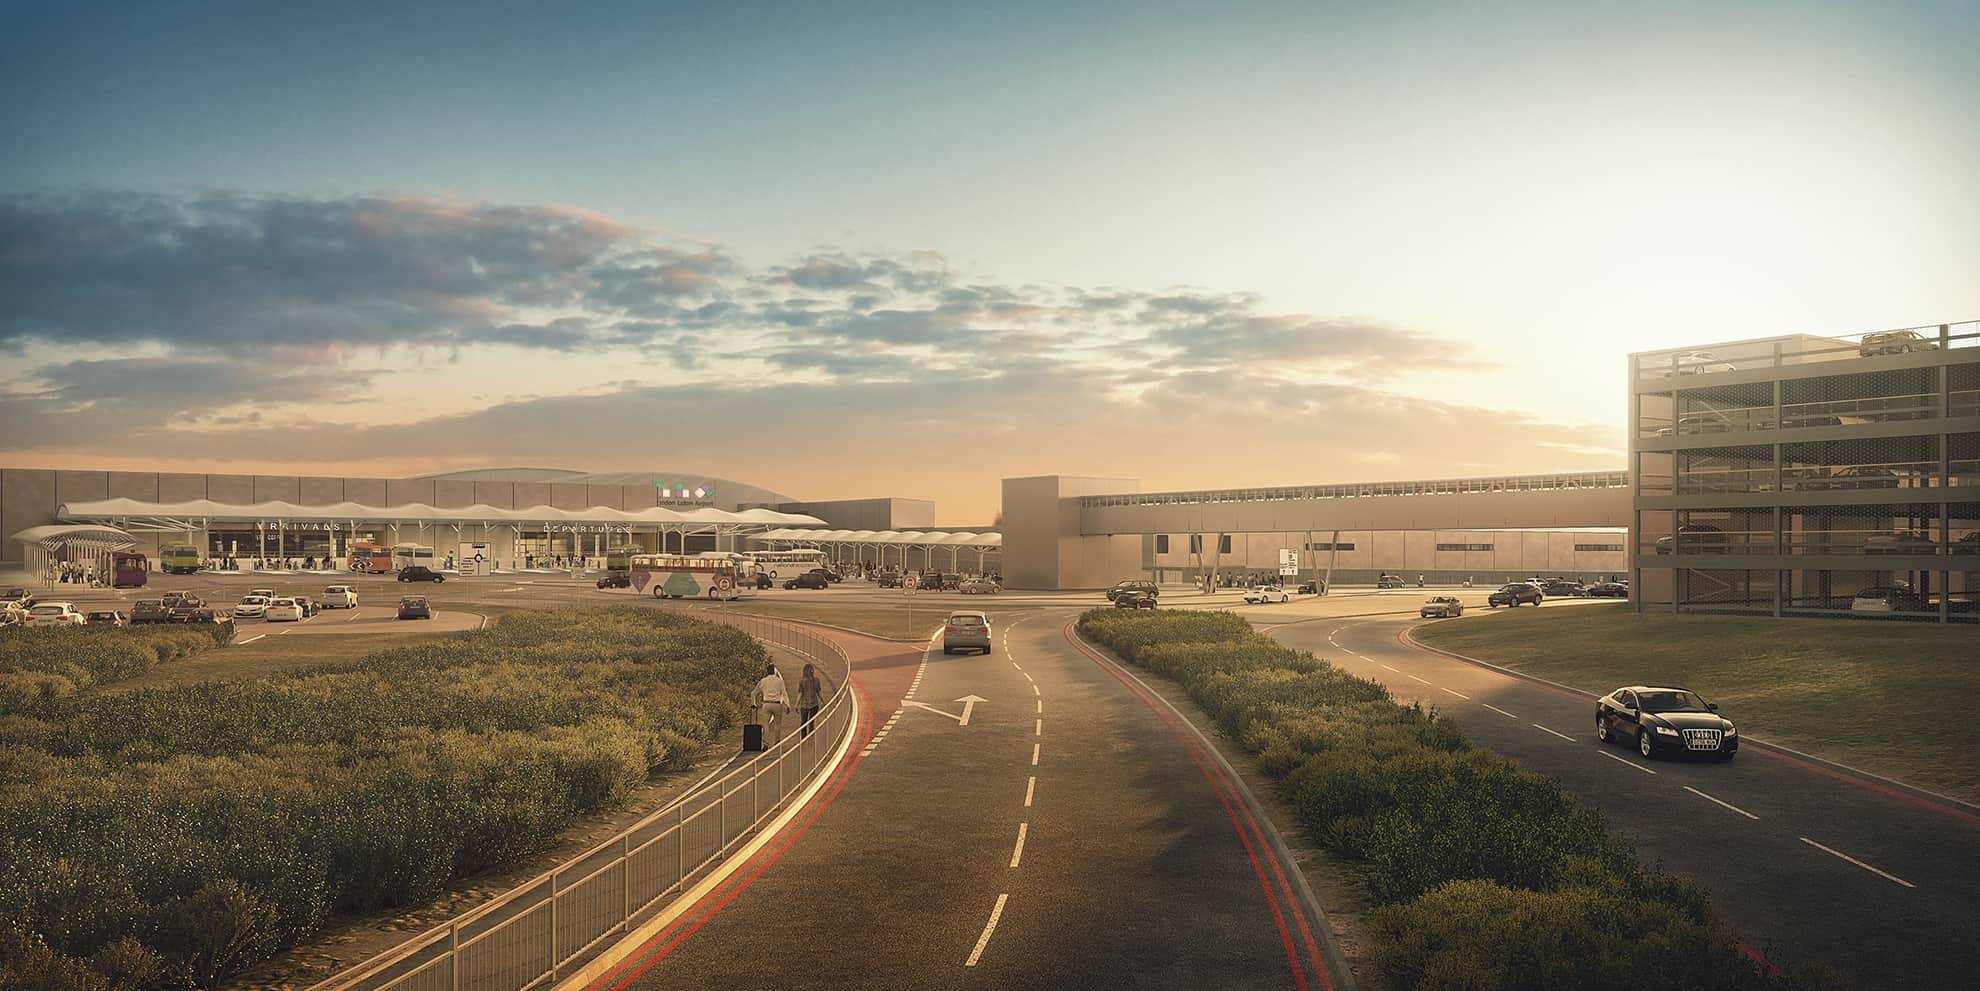 London Luton Airport CGI